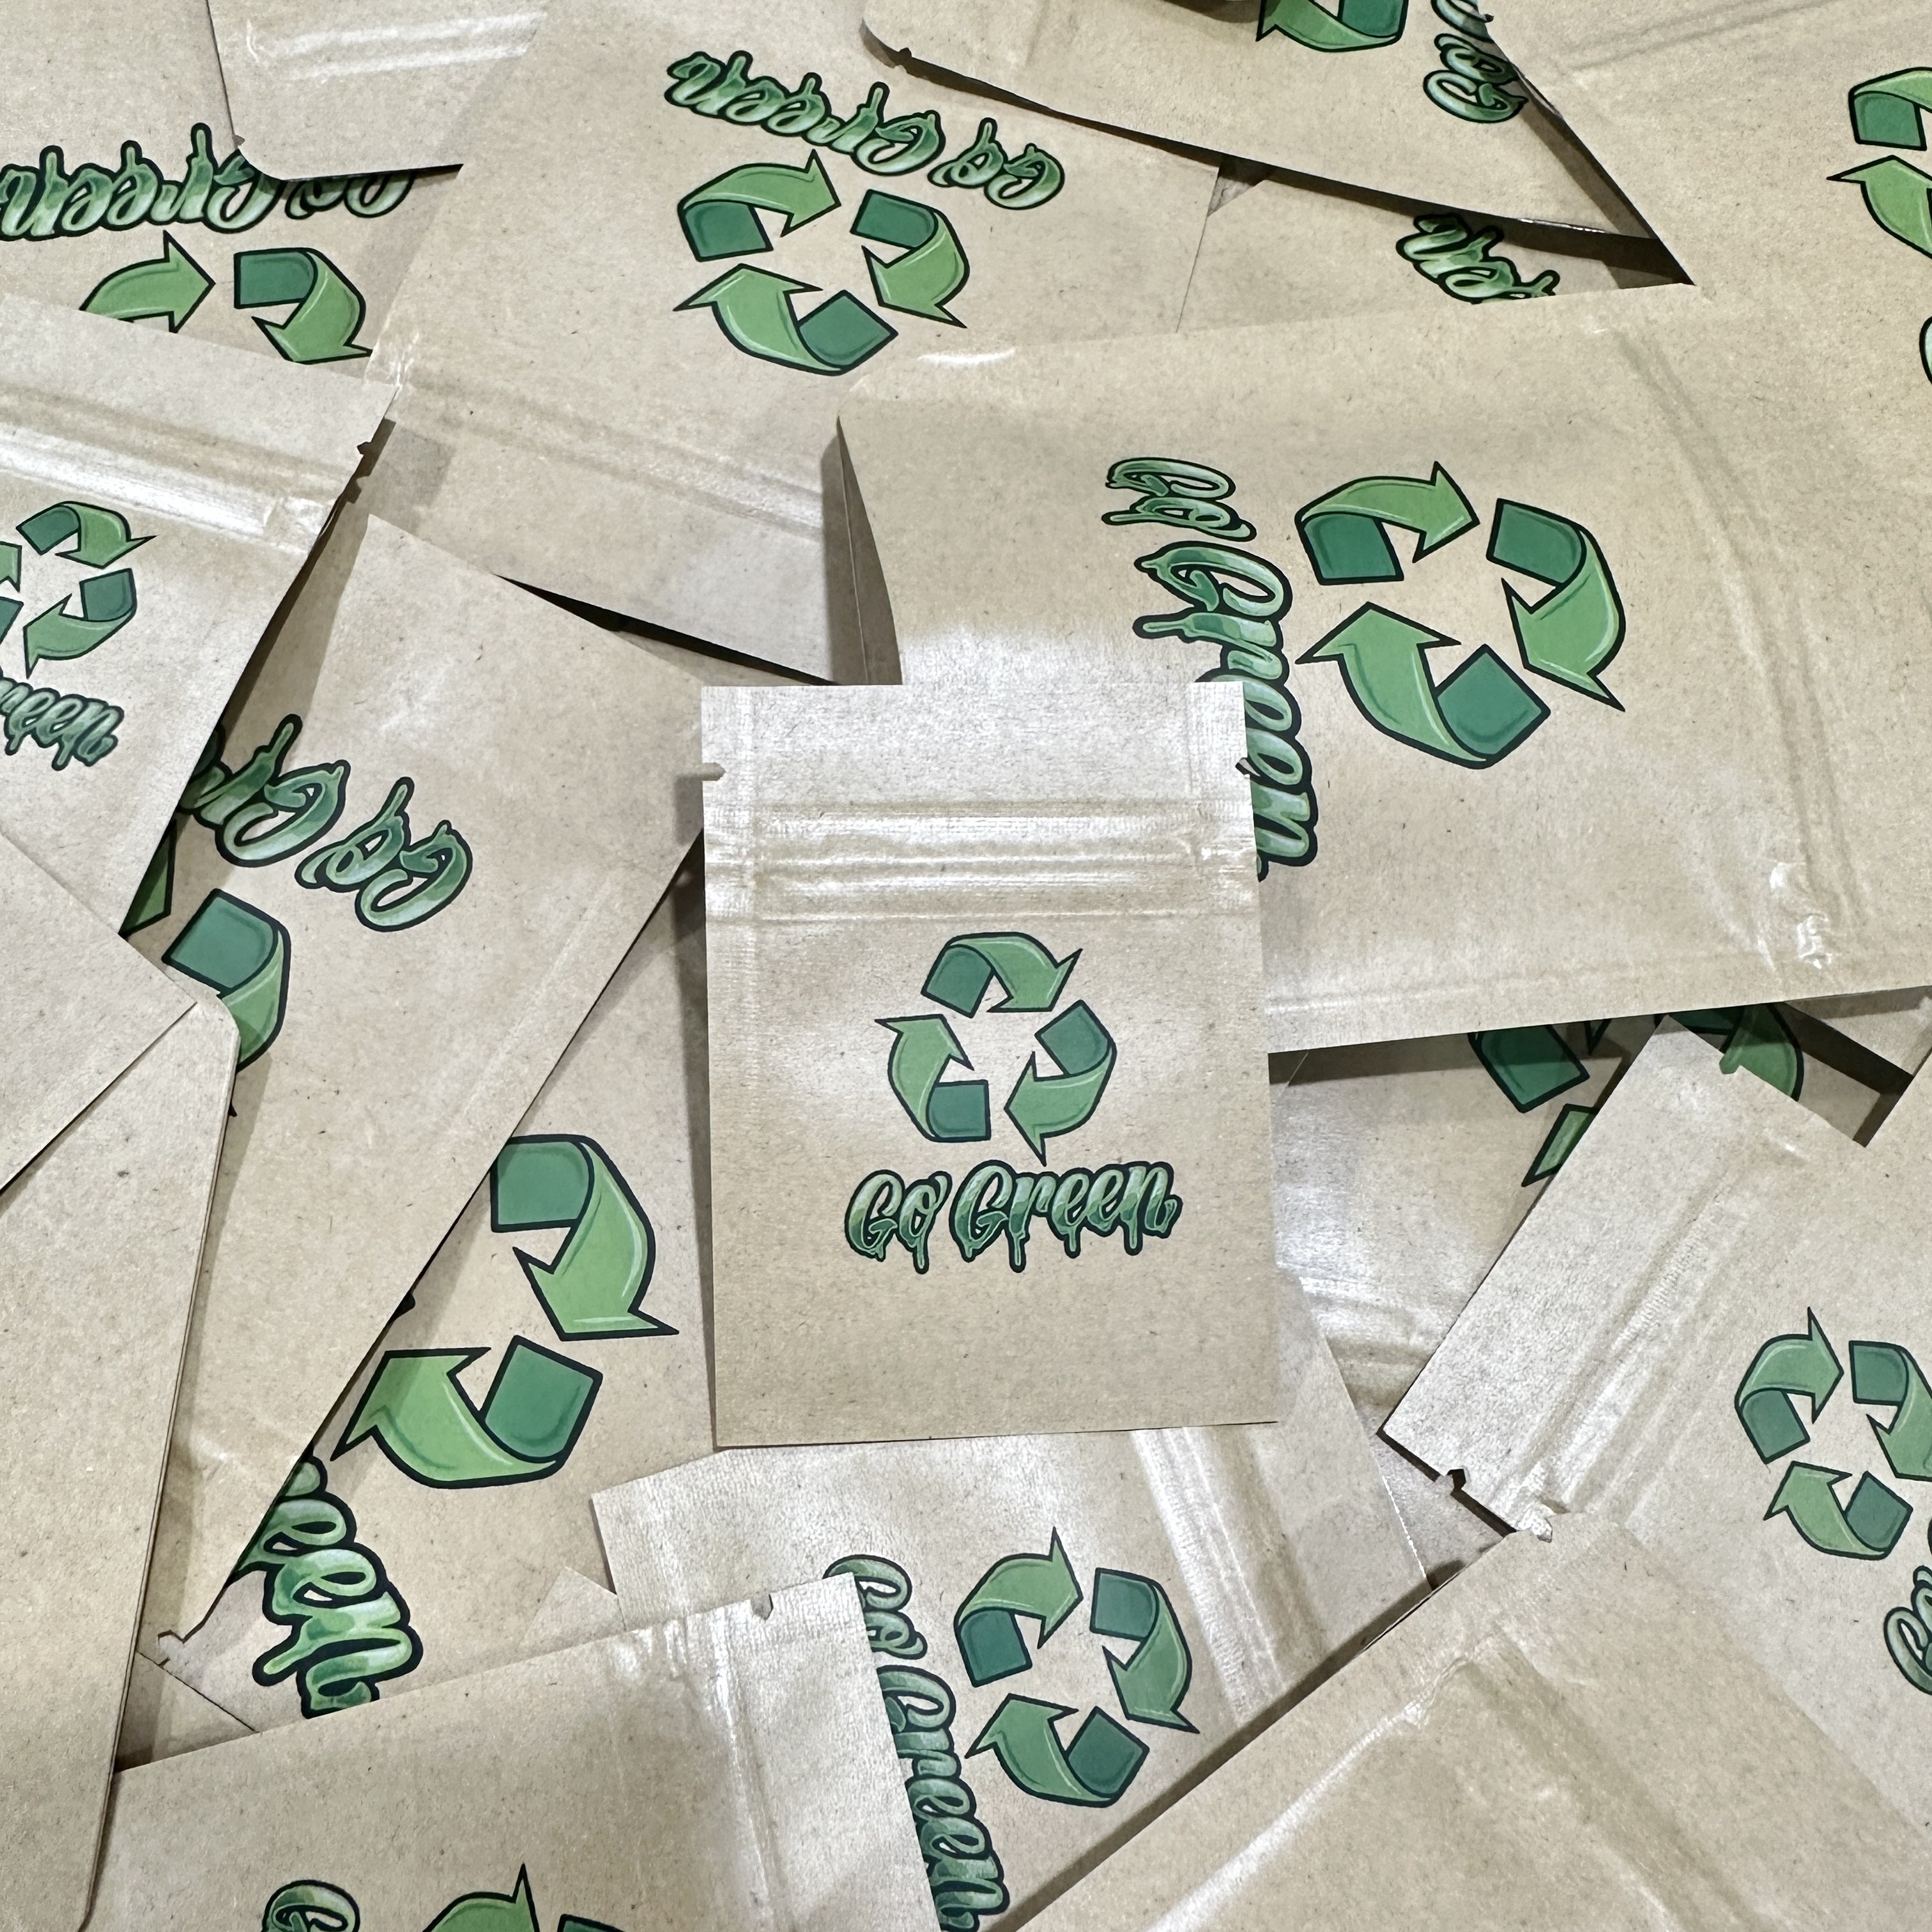 Mylar Bags for Food Storage 3.5g Bag Size Small Medium 1 Gallon